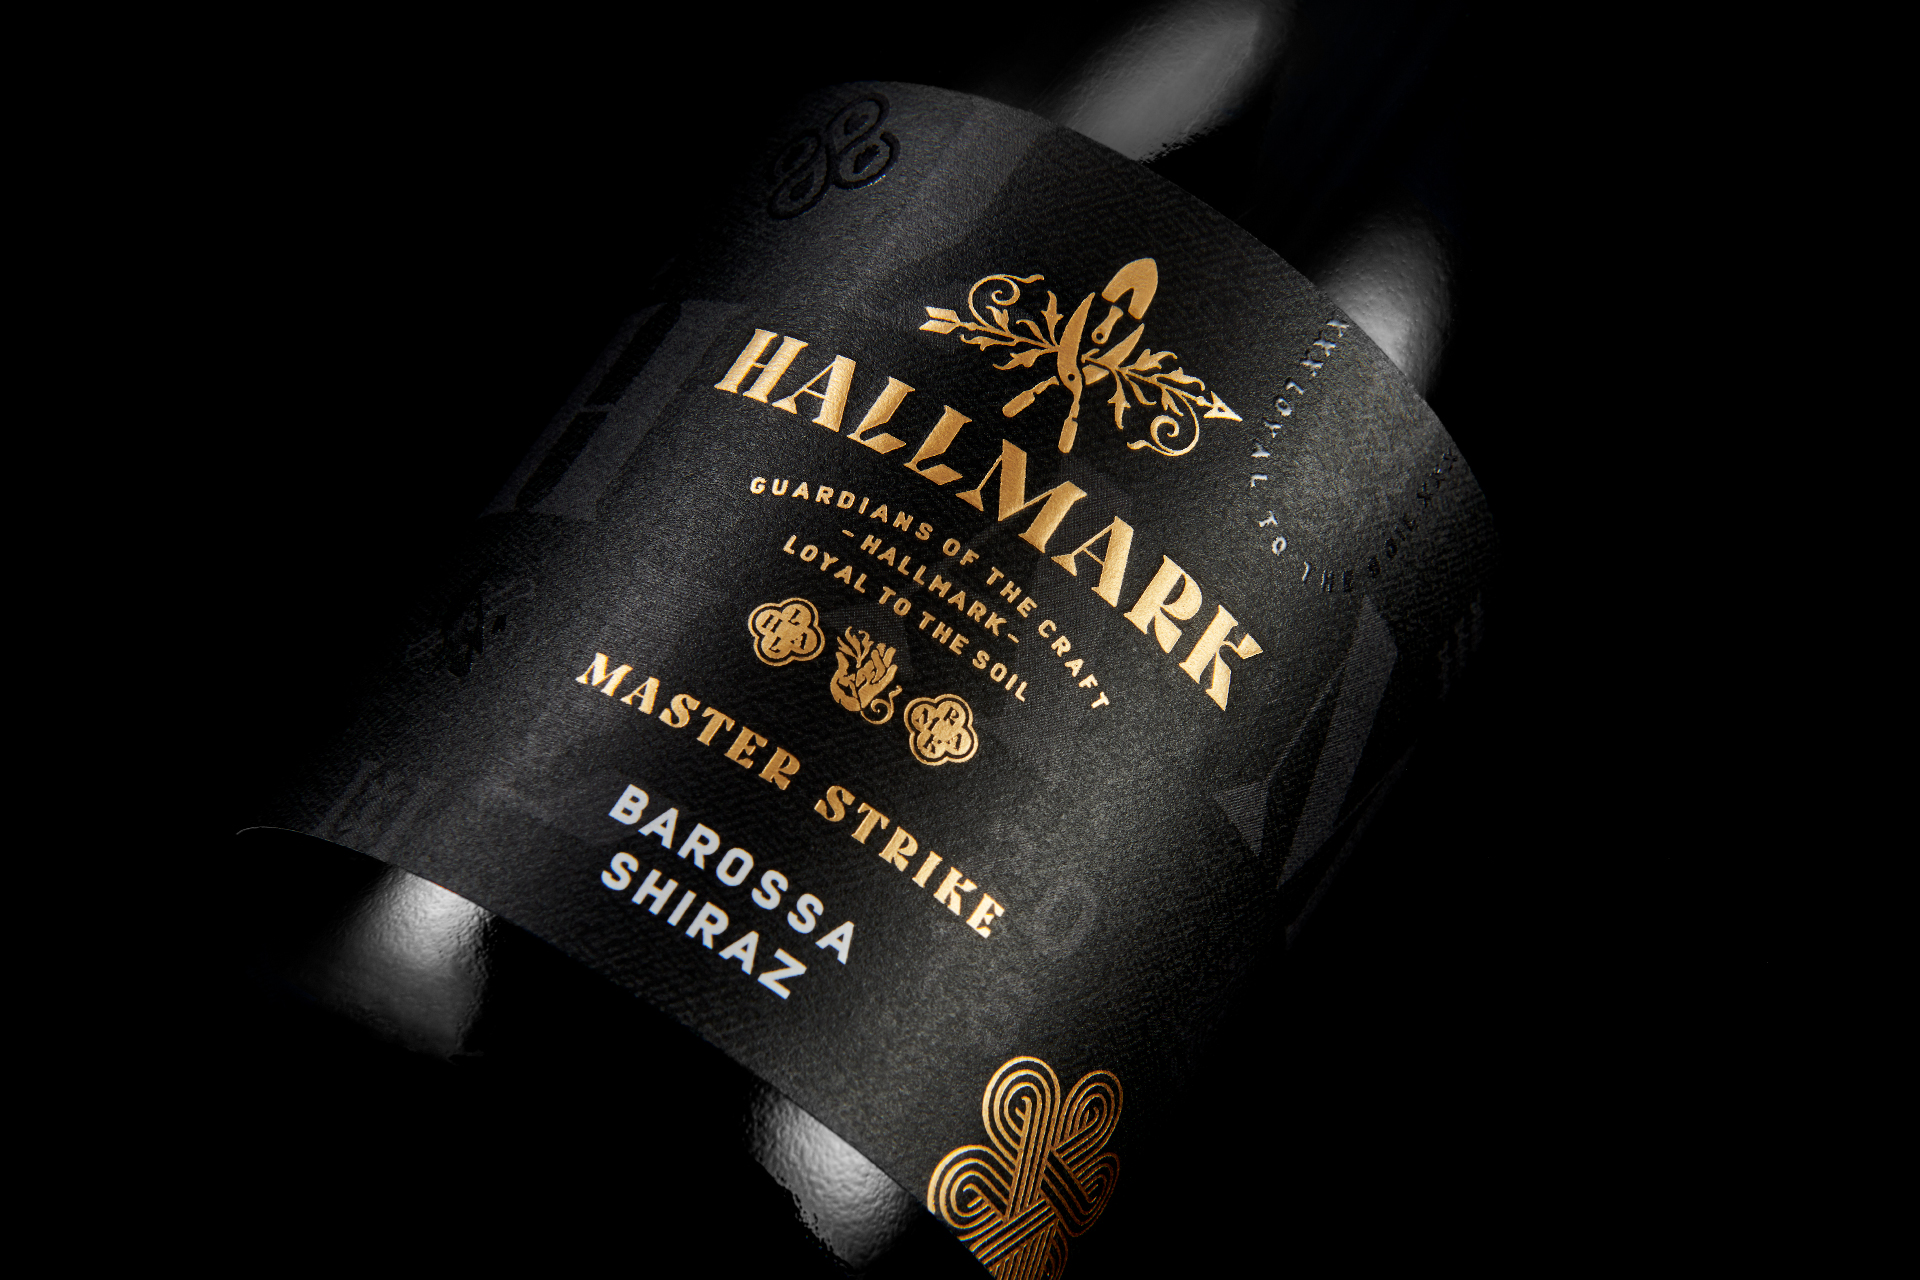 Harcus Design Create Label for Hallmark Artisan Winemaker